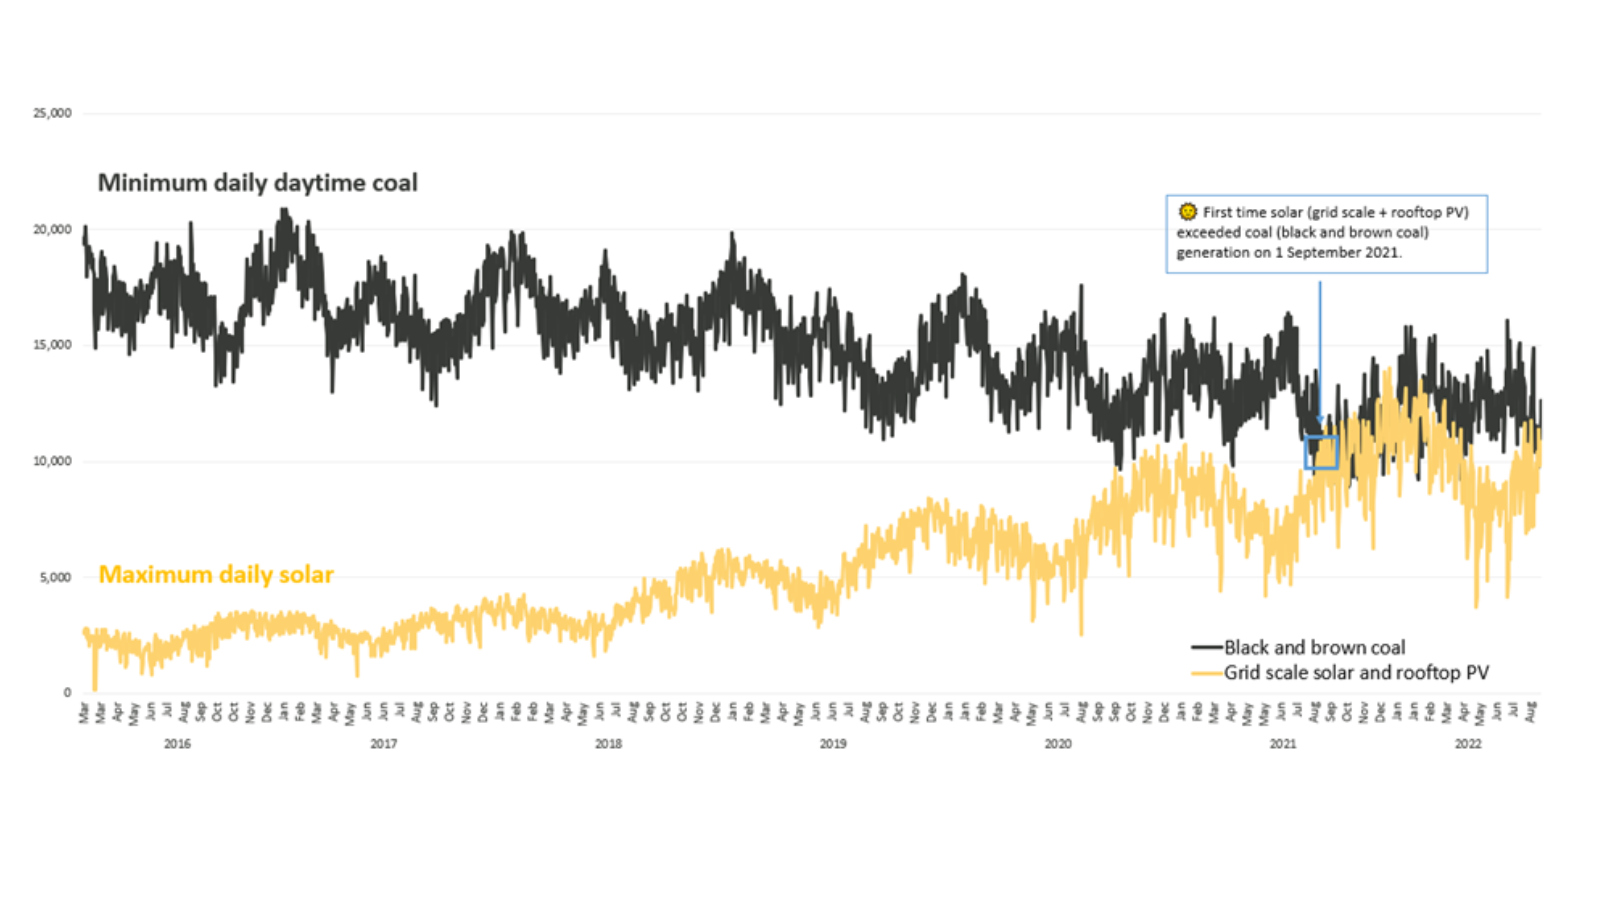 NEM Minimum Daytime Coal Generation vs Maximum Solar Generation